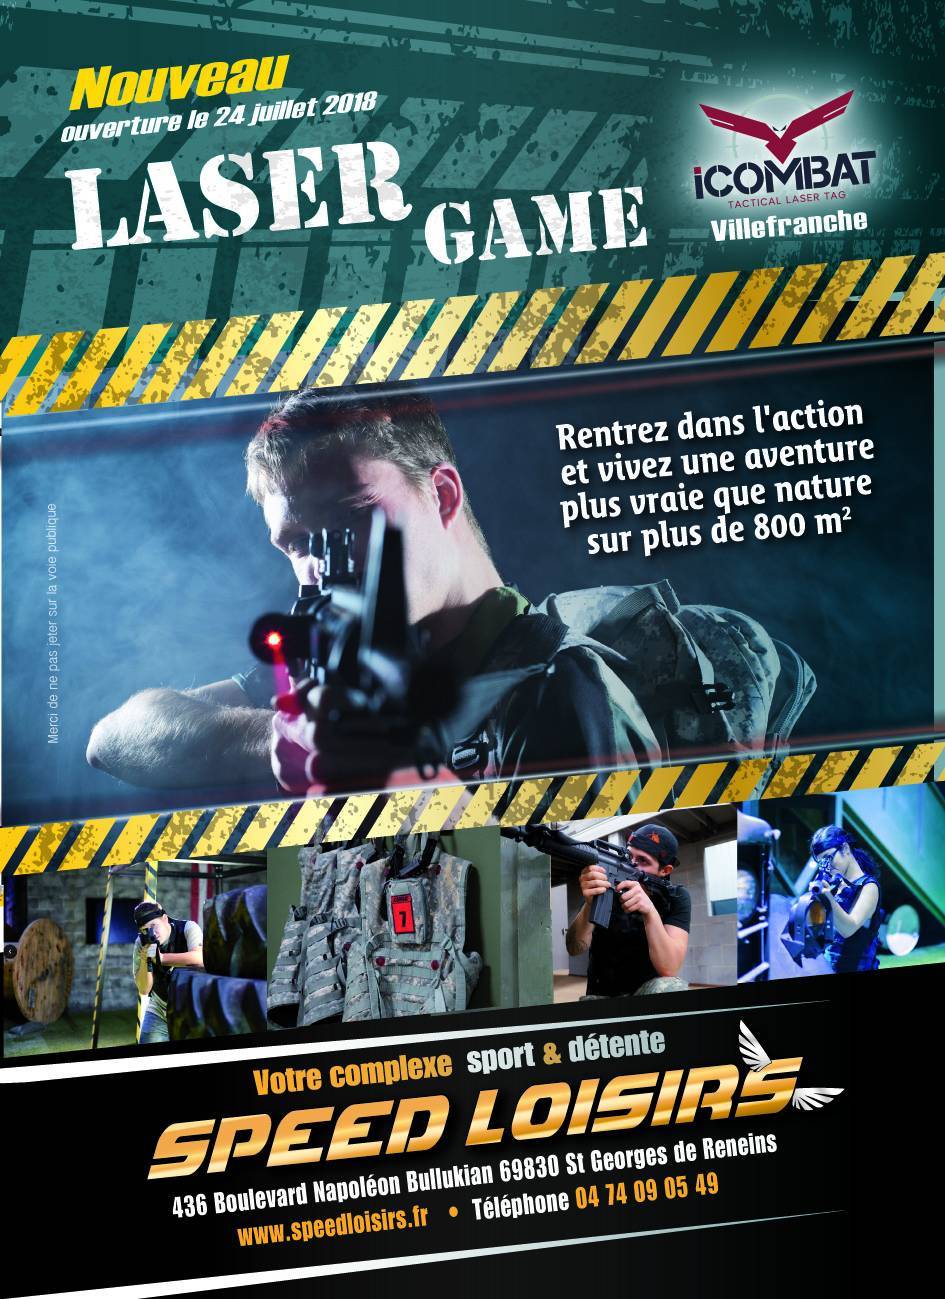 Laser-game Icombat 